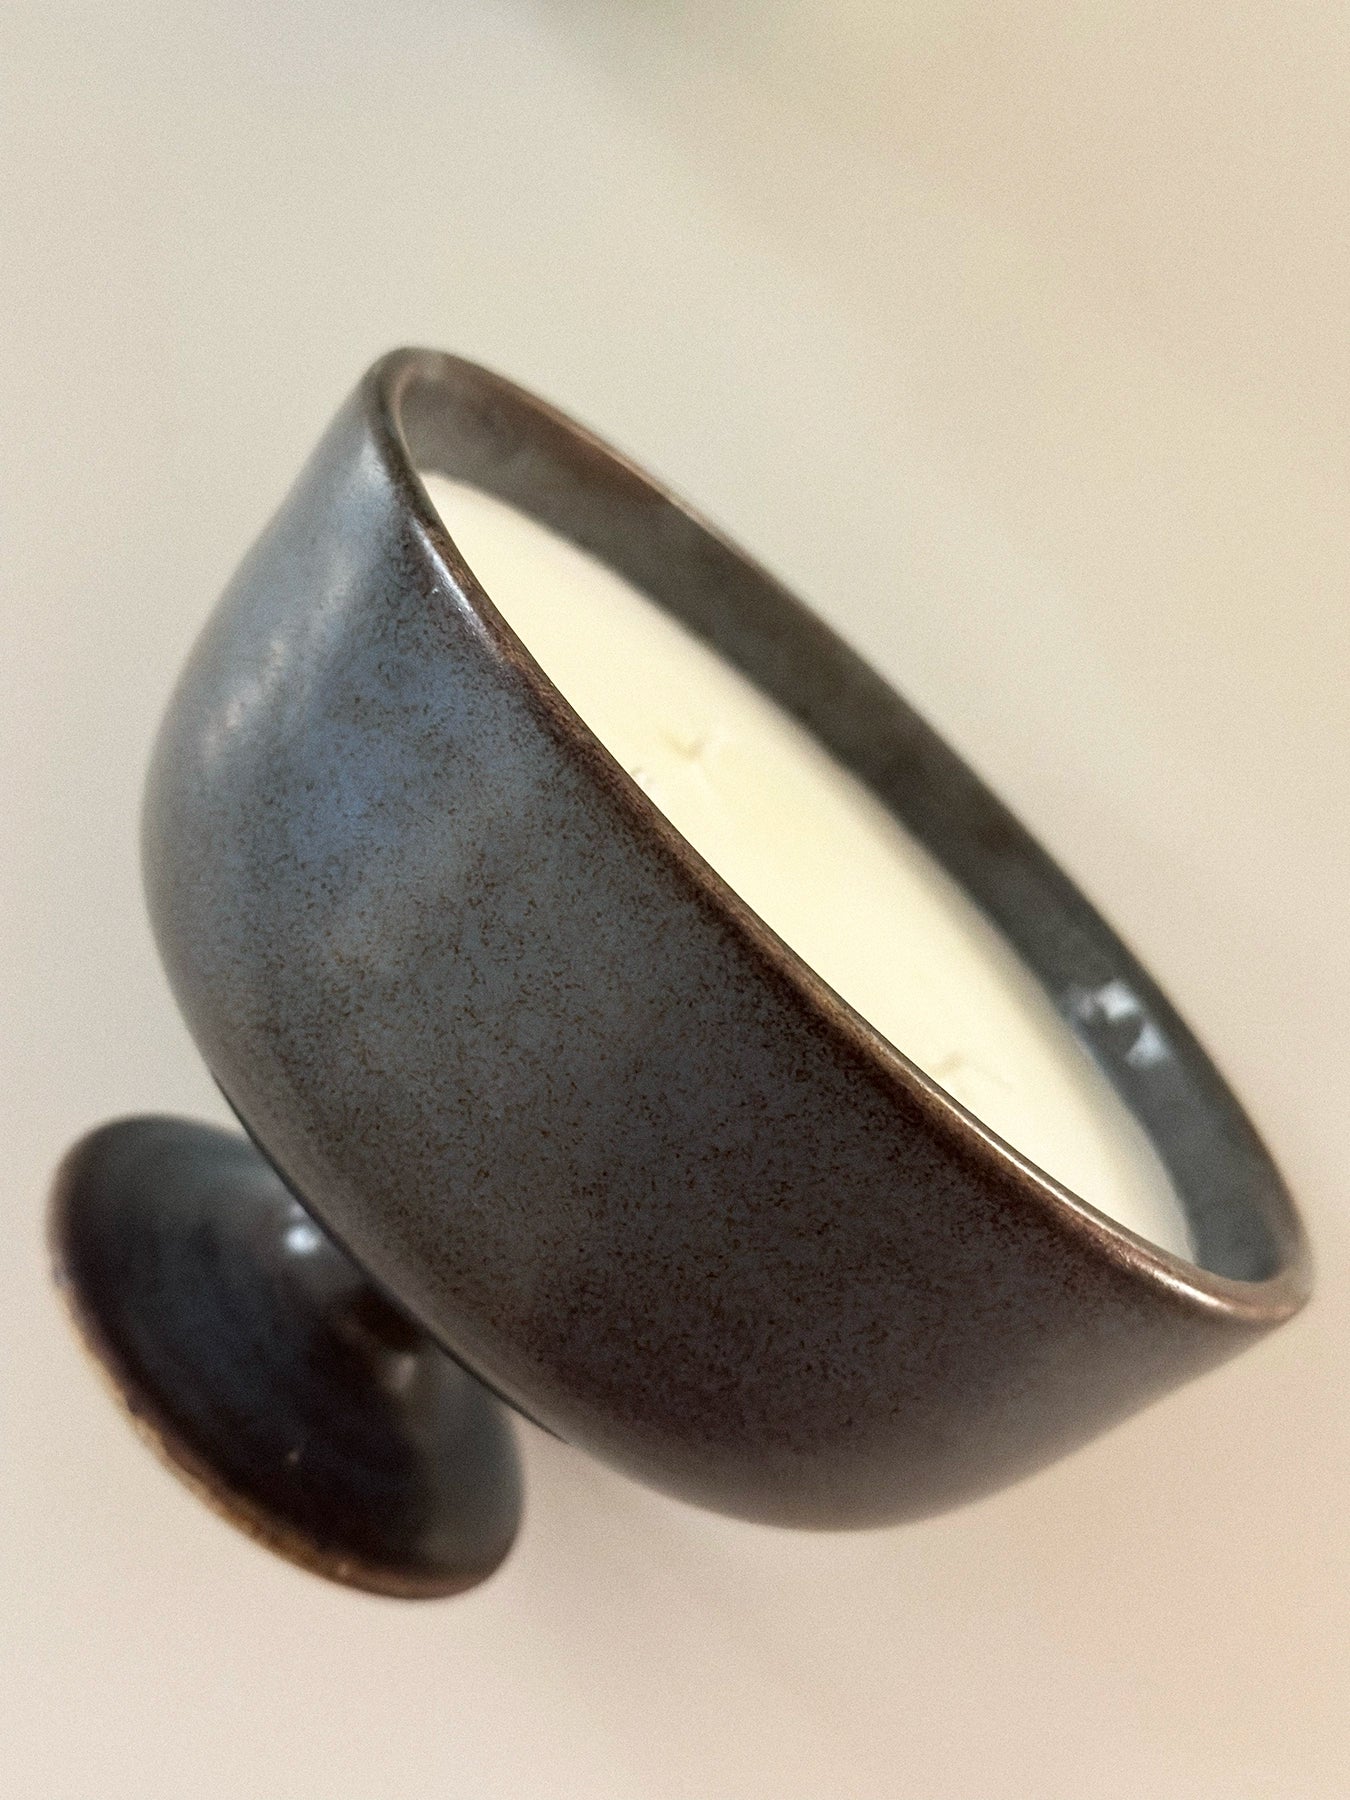 La Vallauris • Scented candle in vintage Vallauris ceramic